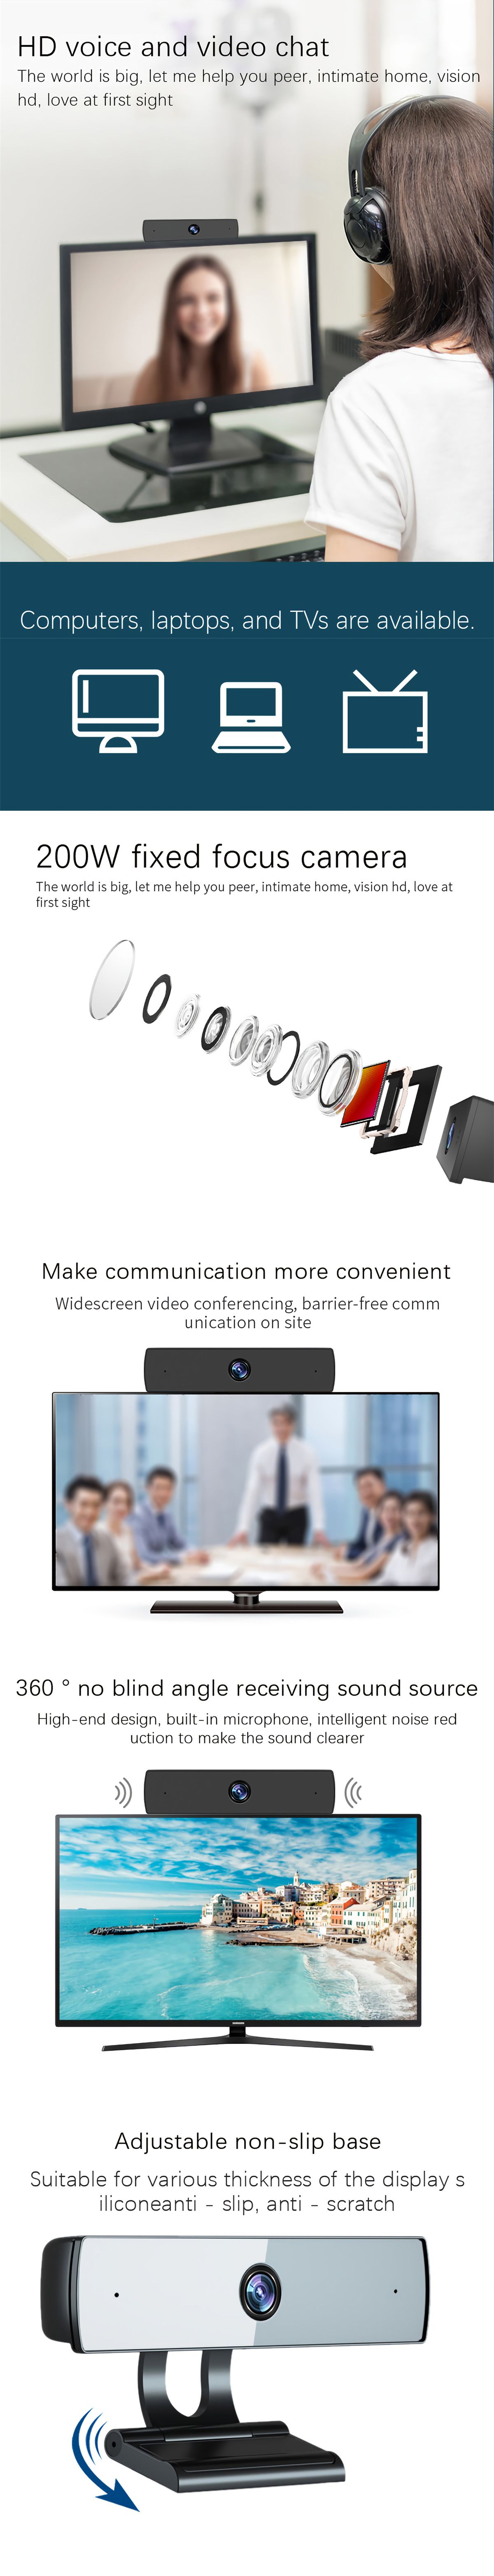 QUANJING-DSS-1-Desktop-Computer-Webcam-30FPS-10-Million-Pixels-with-Microphone-Smart-TV-IPT-Remote-C-1665715